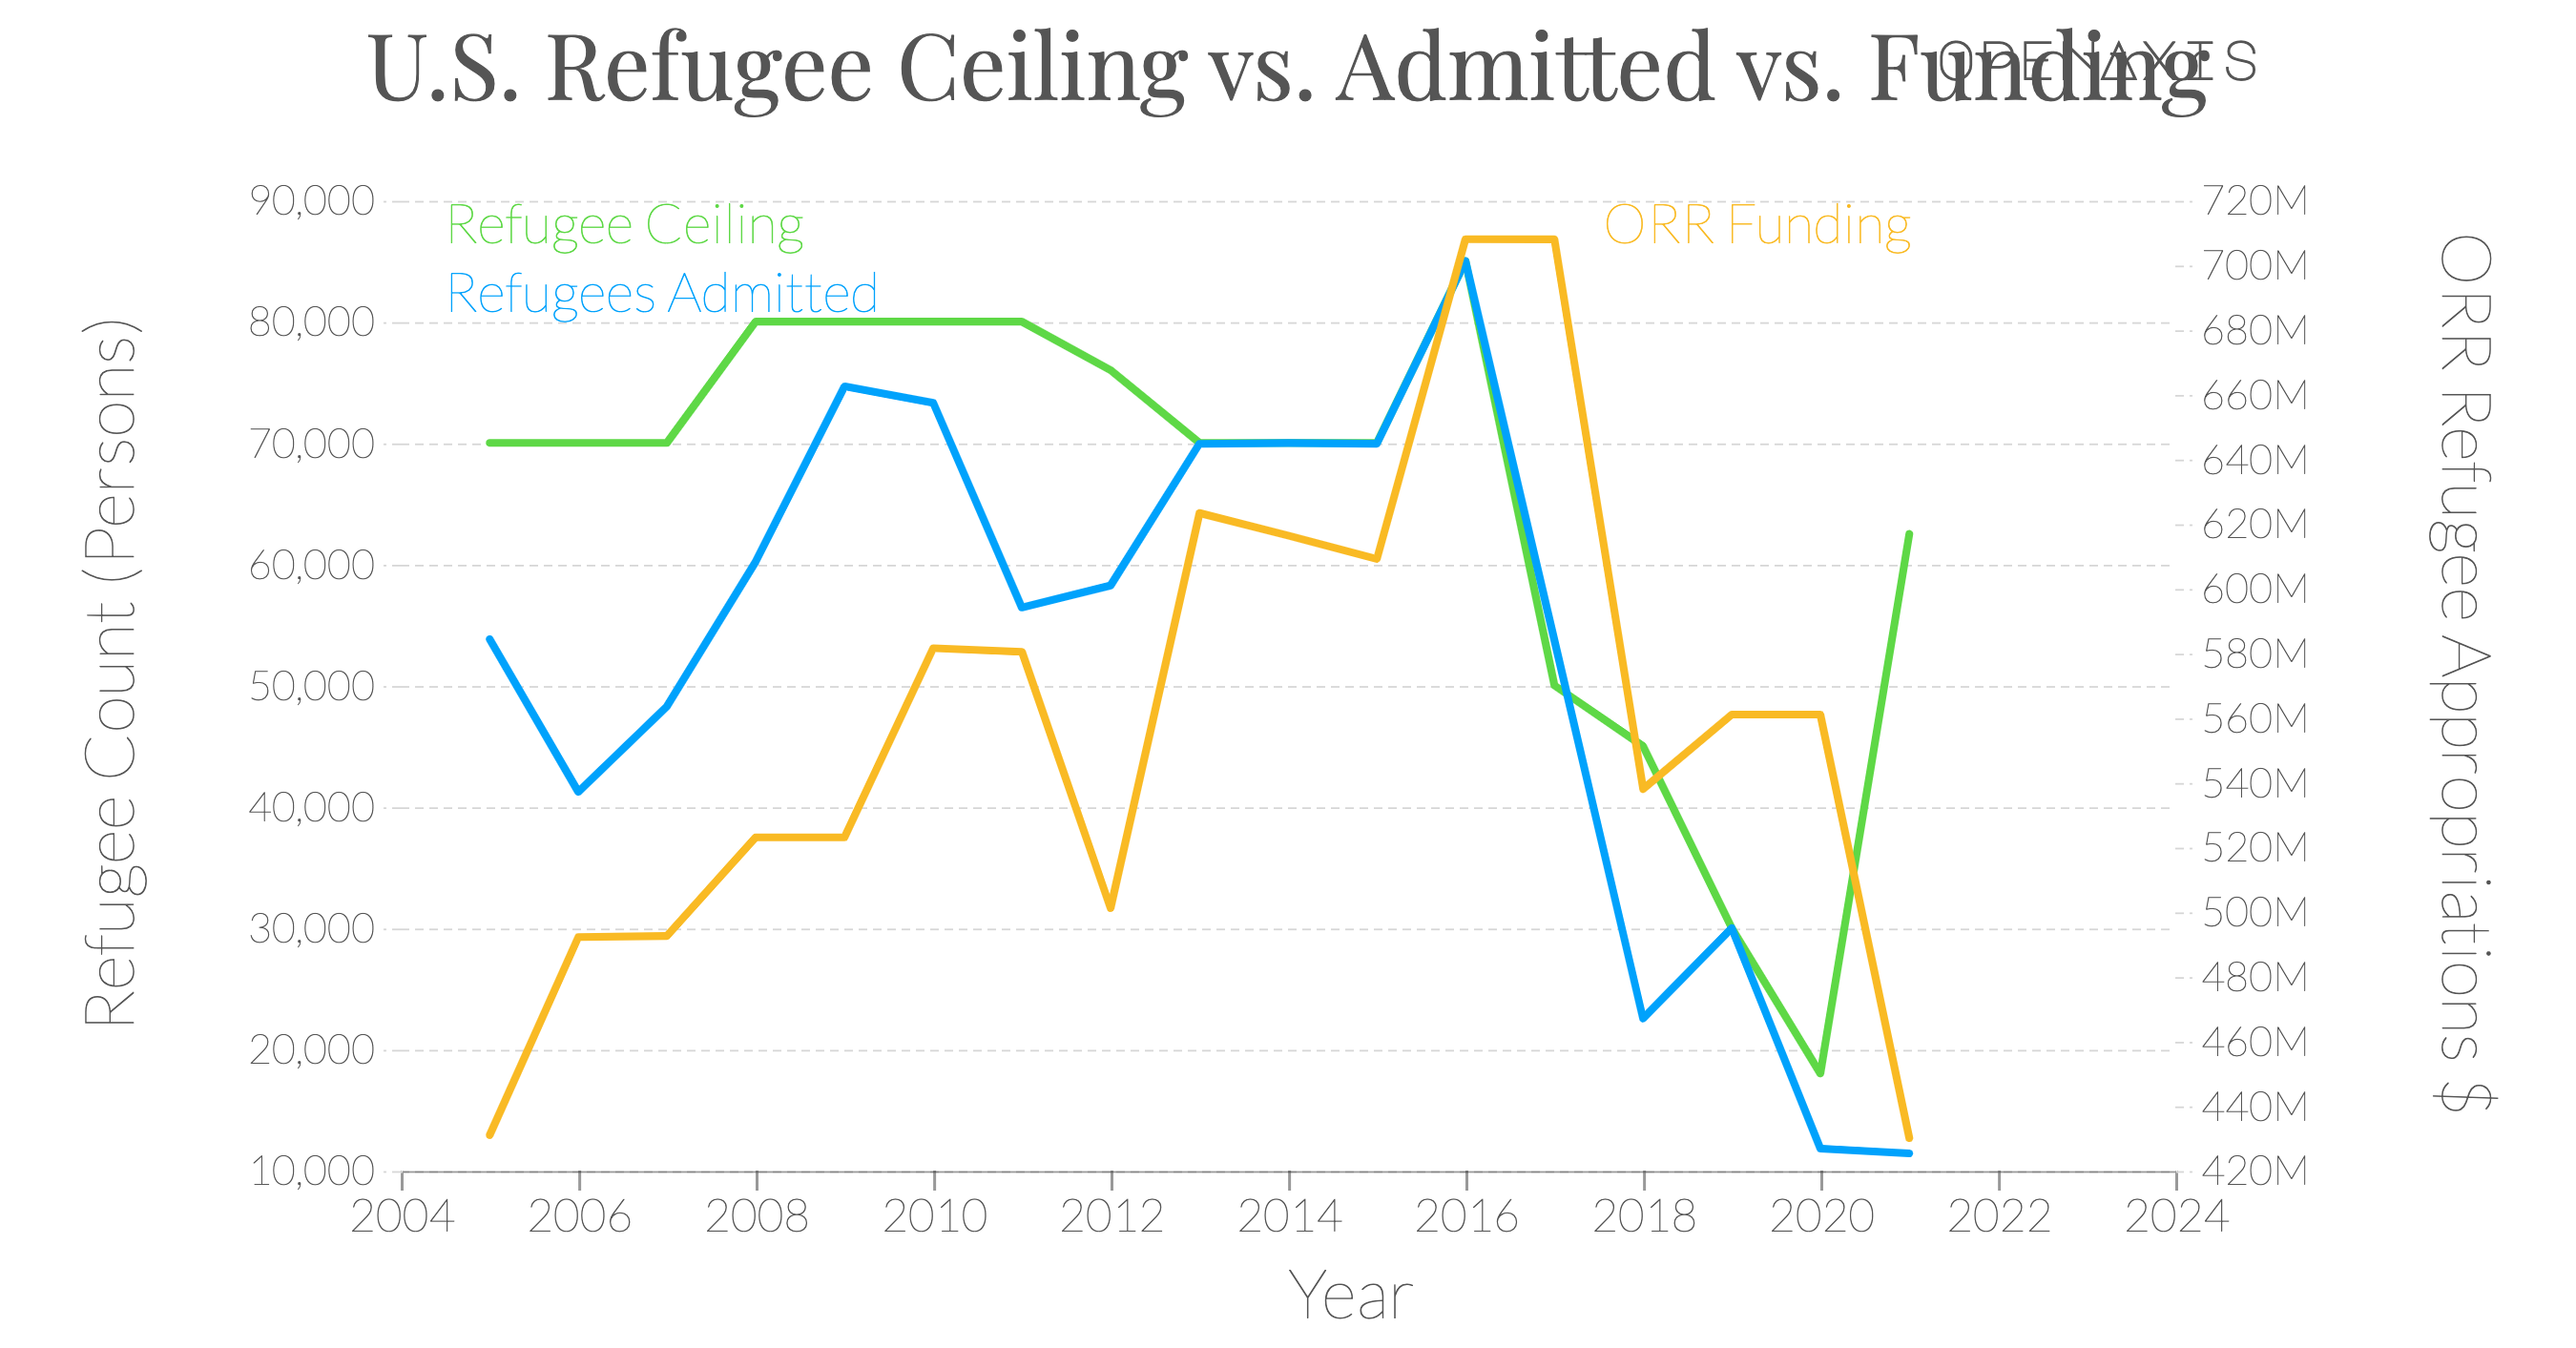 "U.S. Refugee Ceiling vs. Admitted vs. Funding"